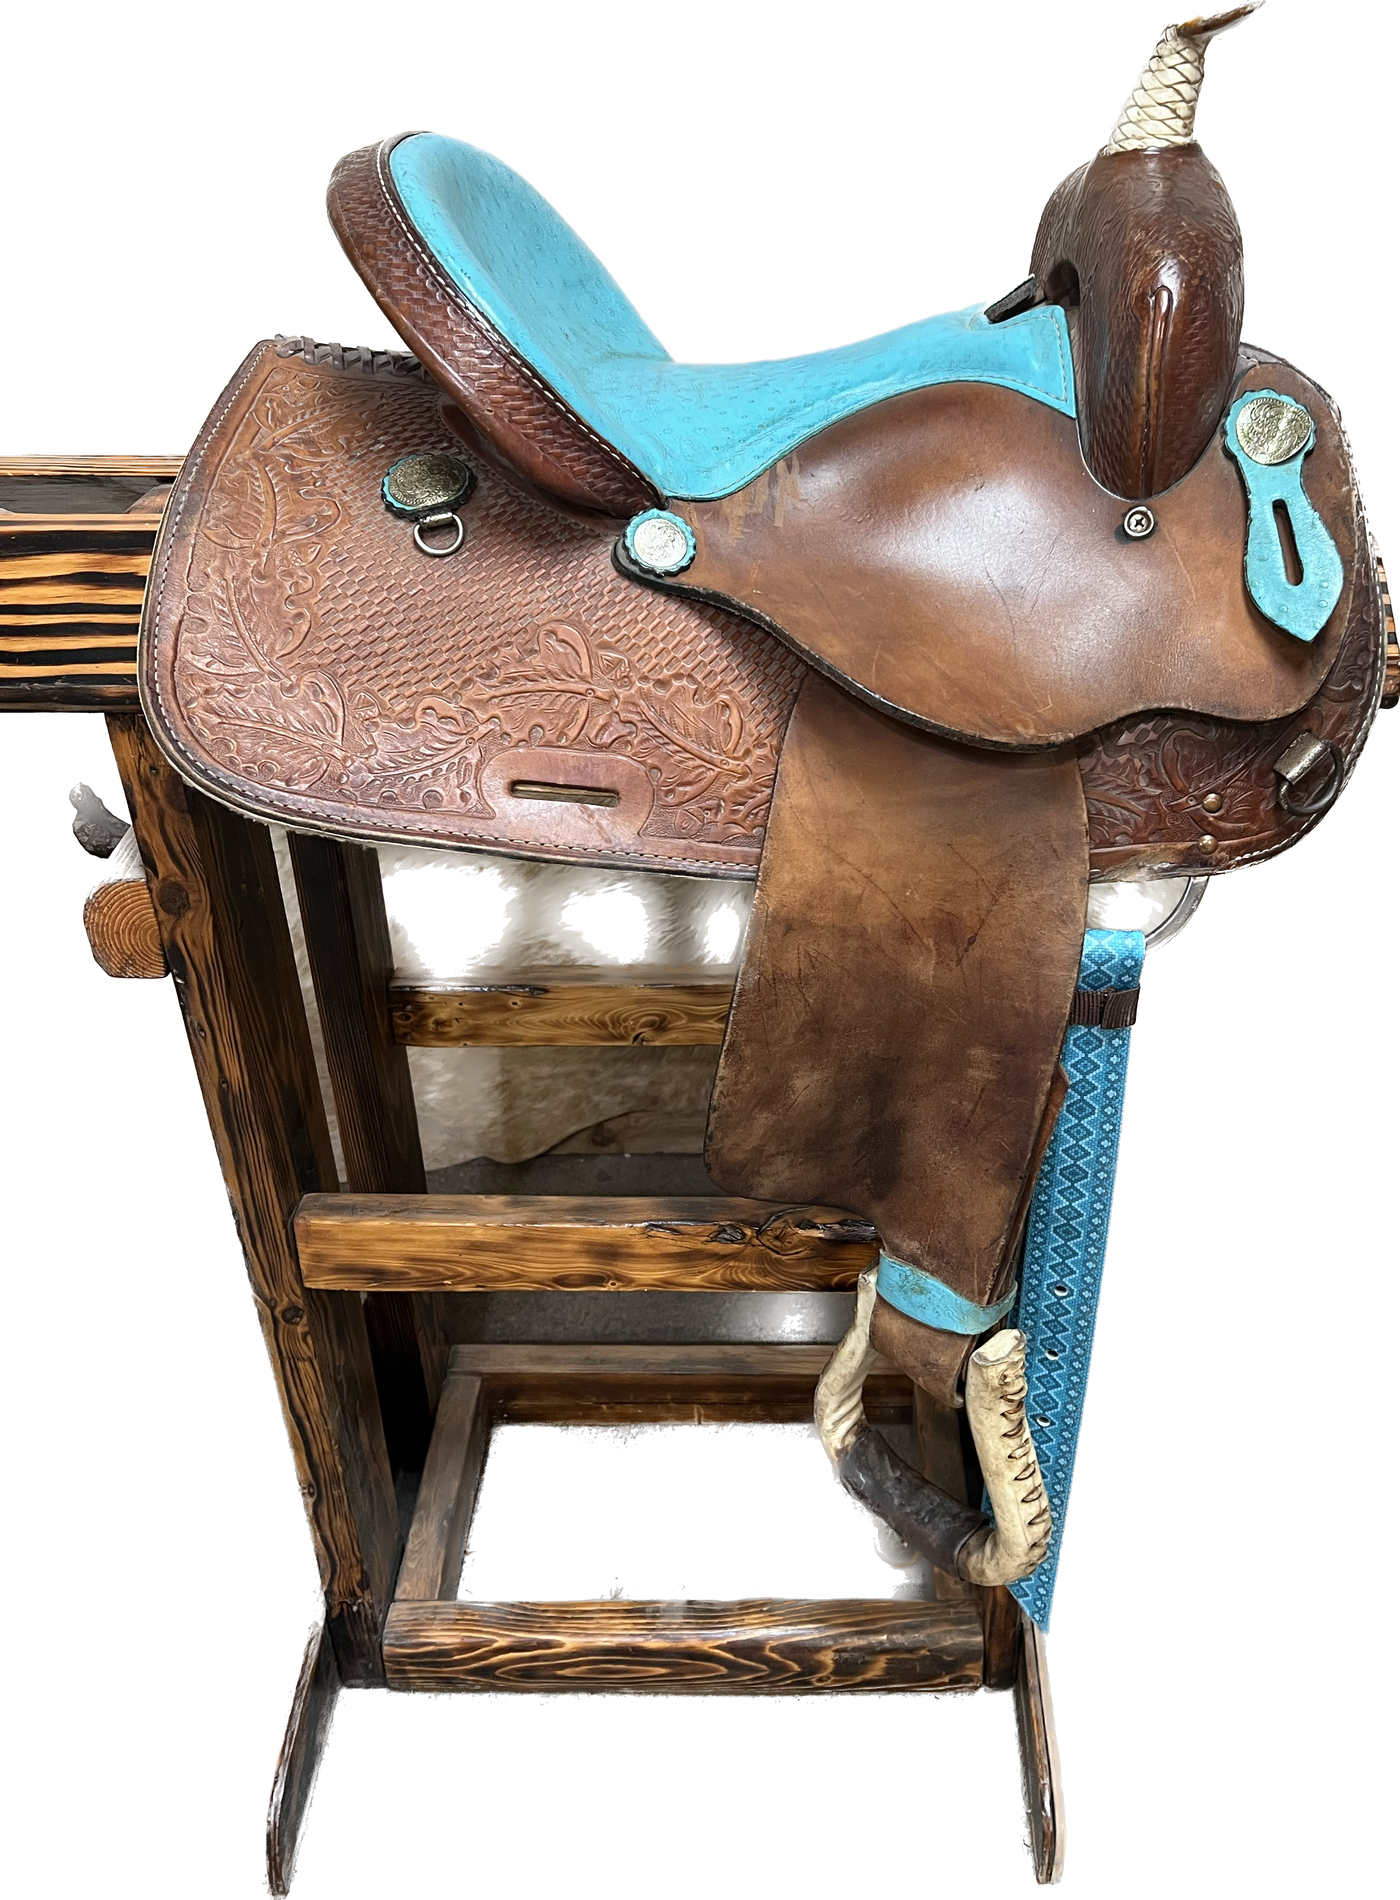 Used Saddle King of Texas barrel 14"